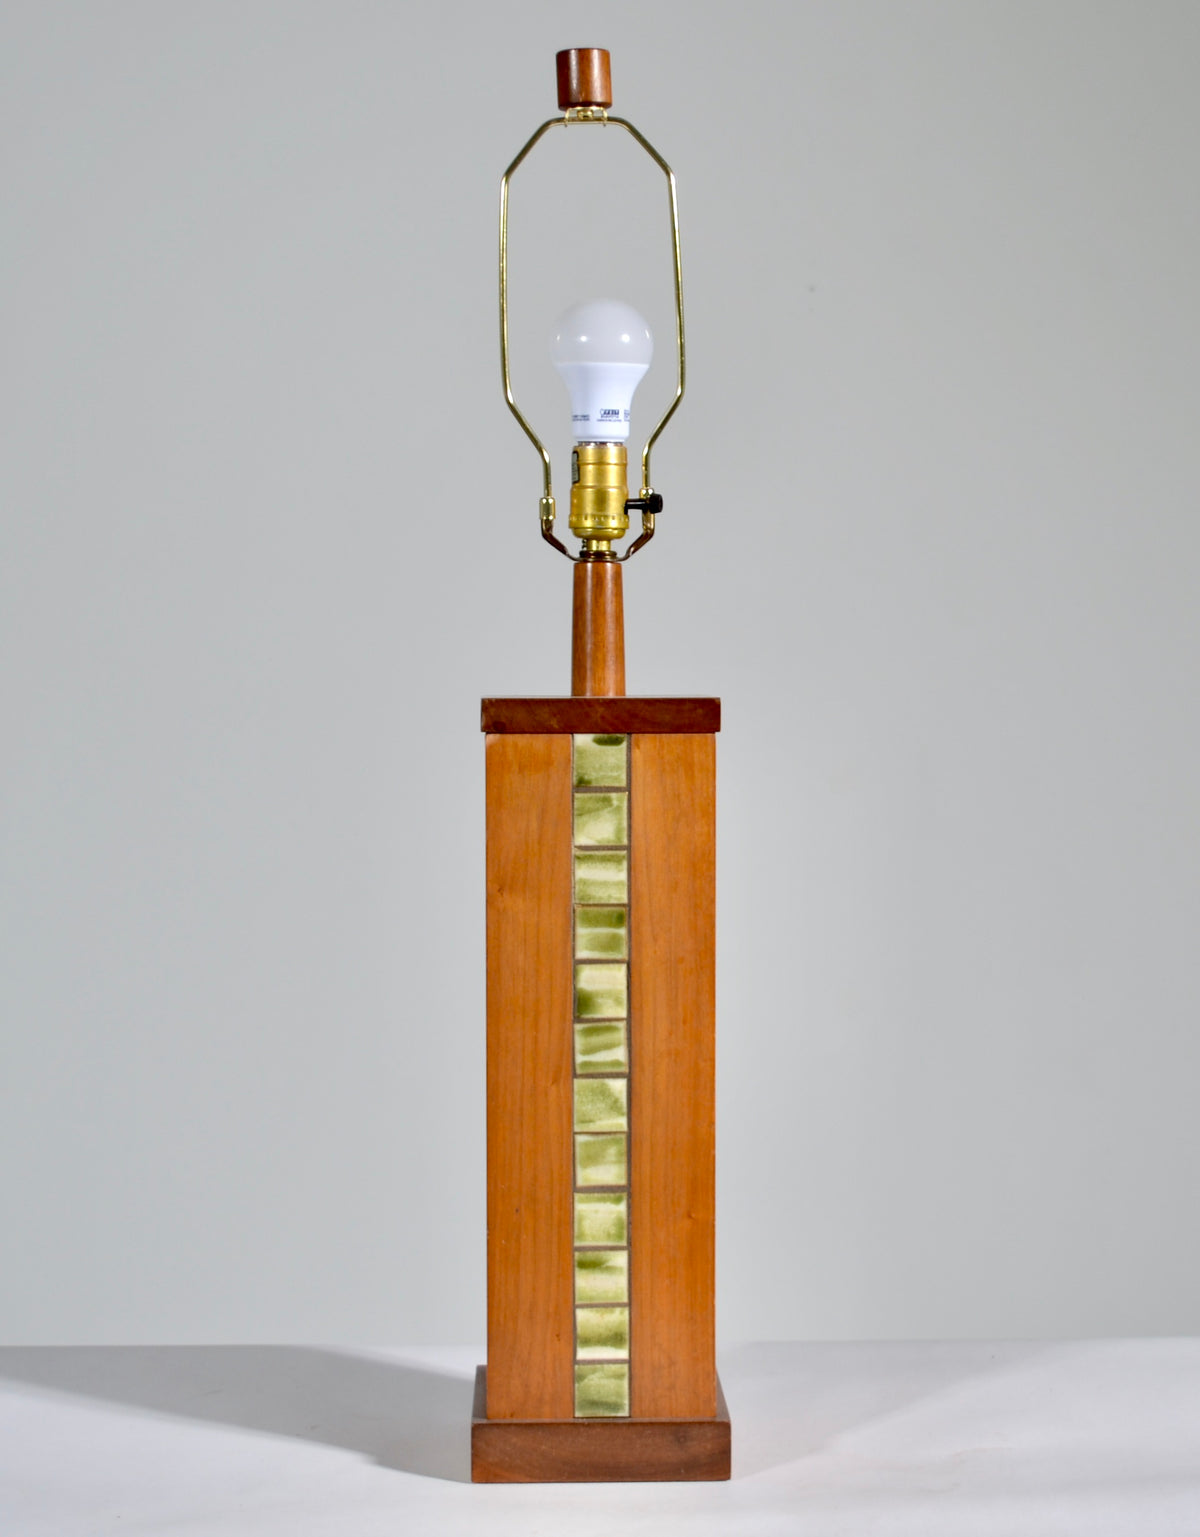 Gordon & Jane Martz - Table Lamp